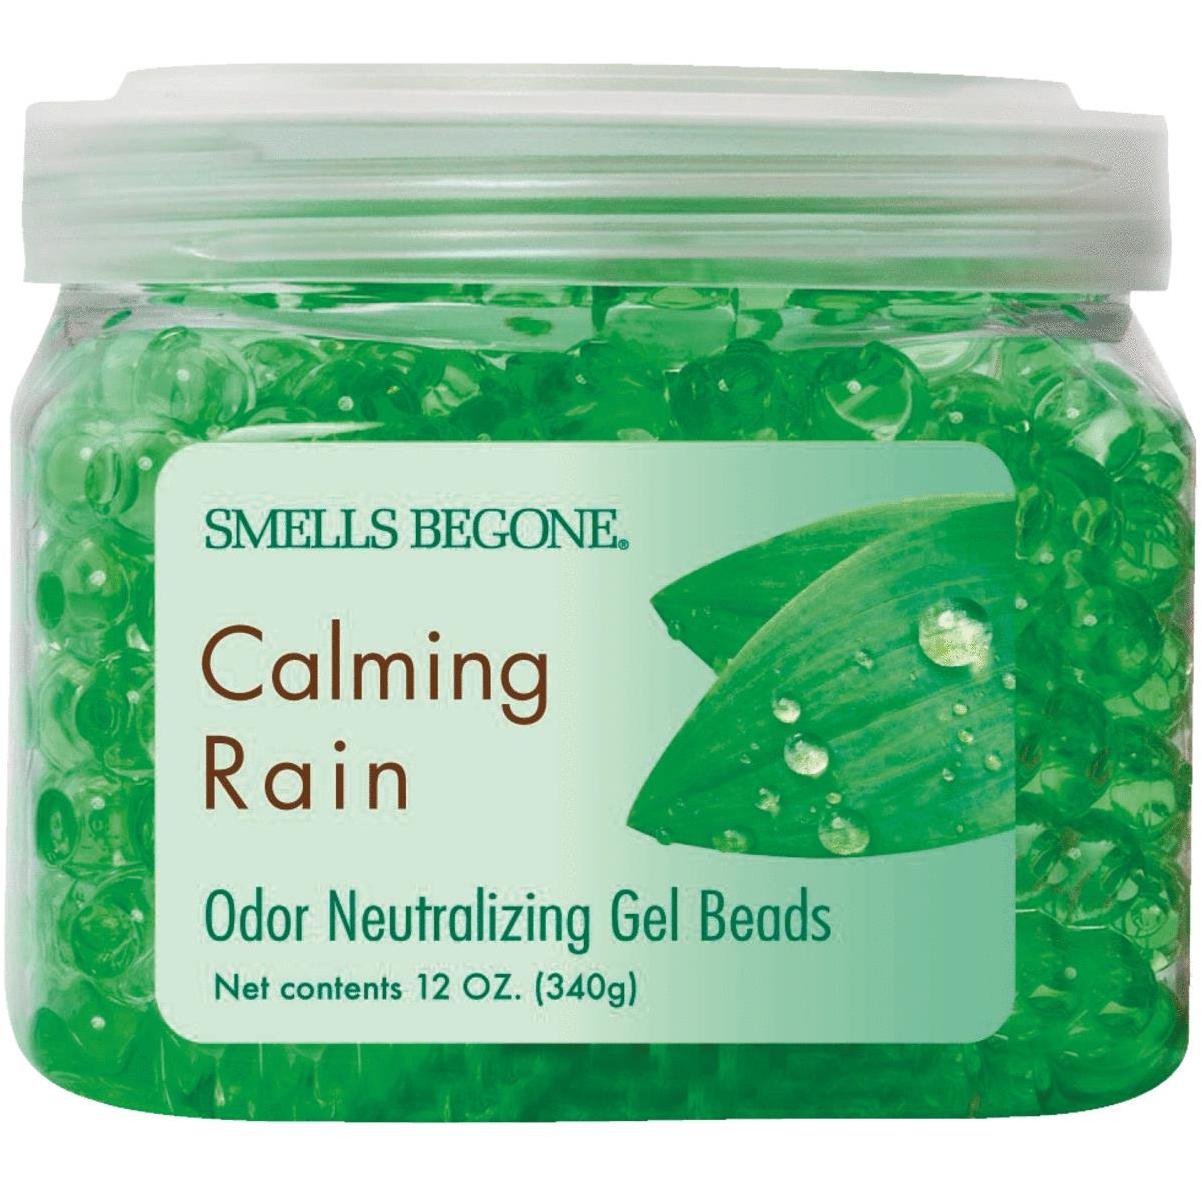 Smells Be Gone Odor Absorbing Gel, Calming Rain Scent - 15 oz jar